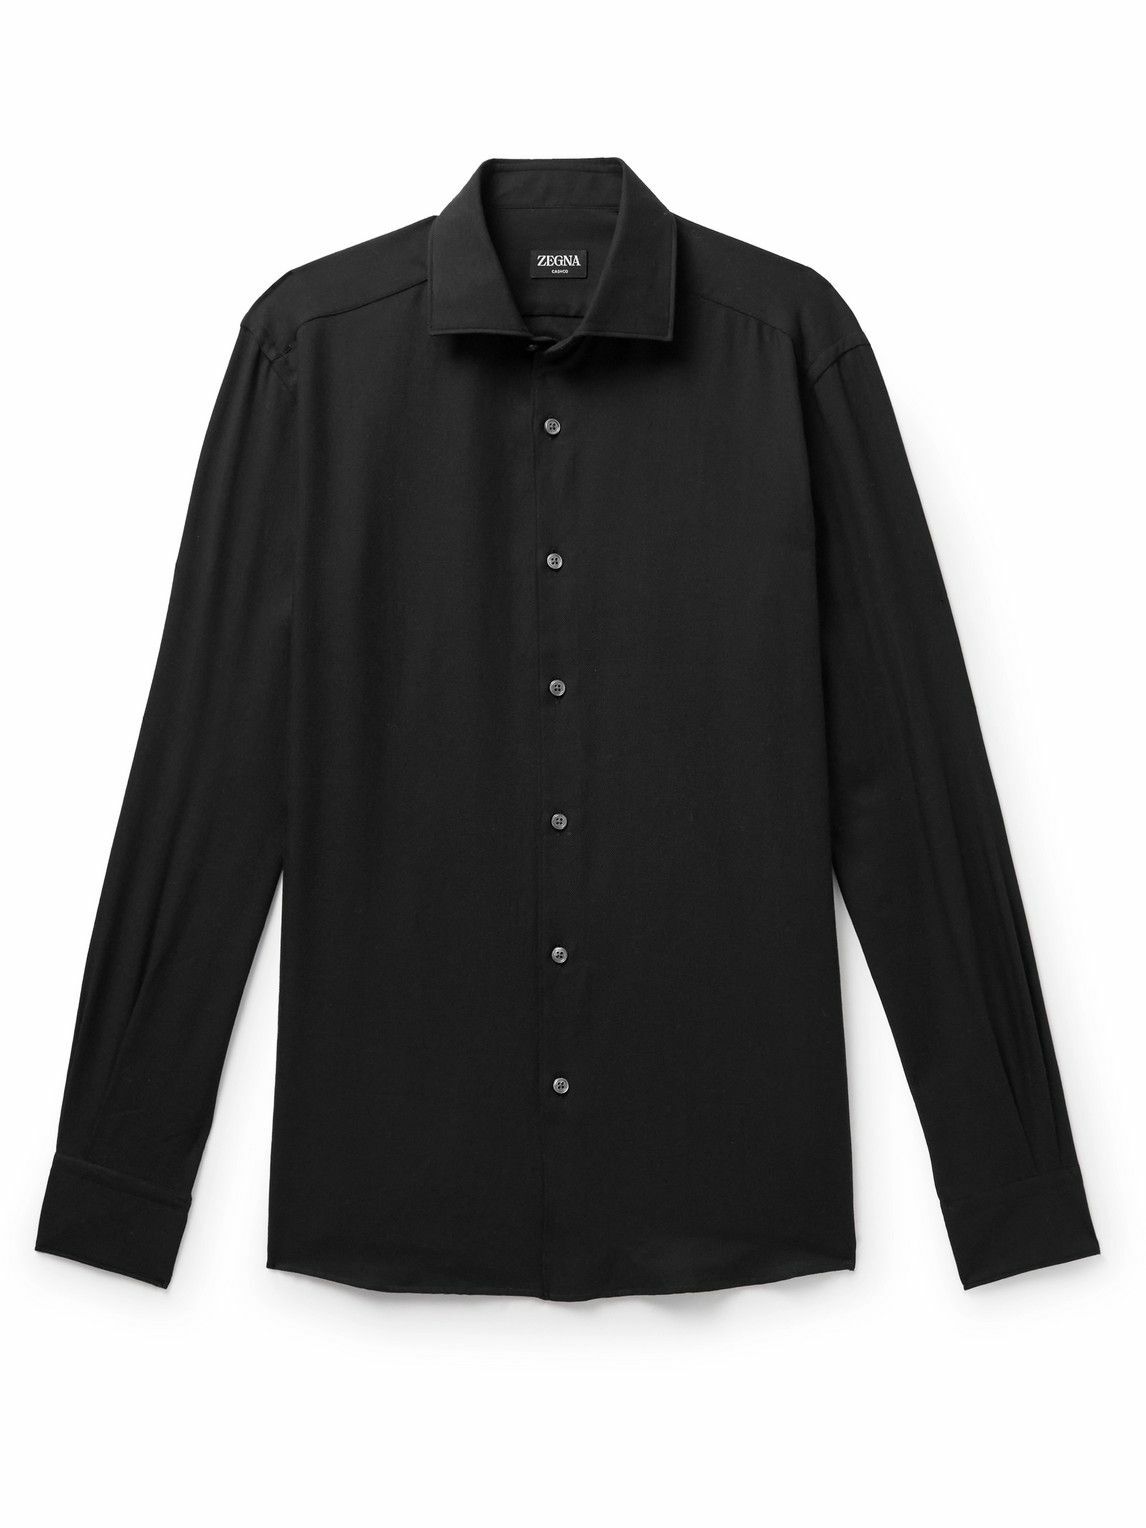 Zegna - Cotton and Cashmere-Blend Twill Shirt - Black Zegna